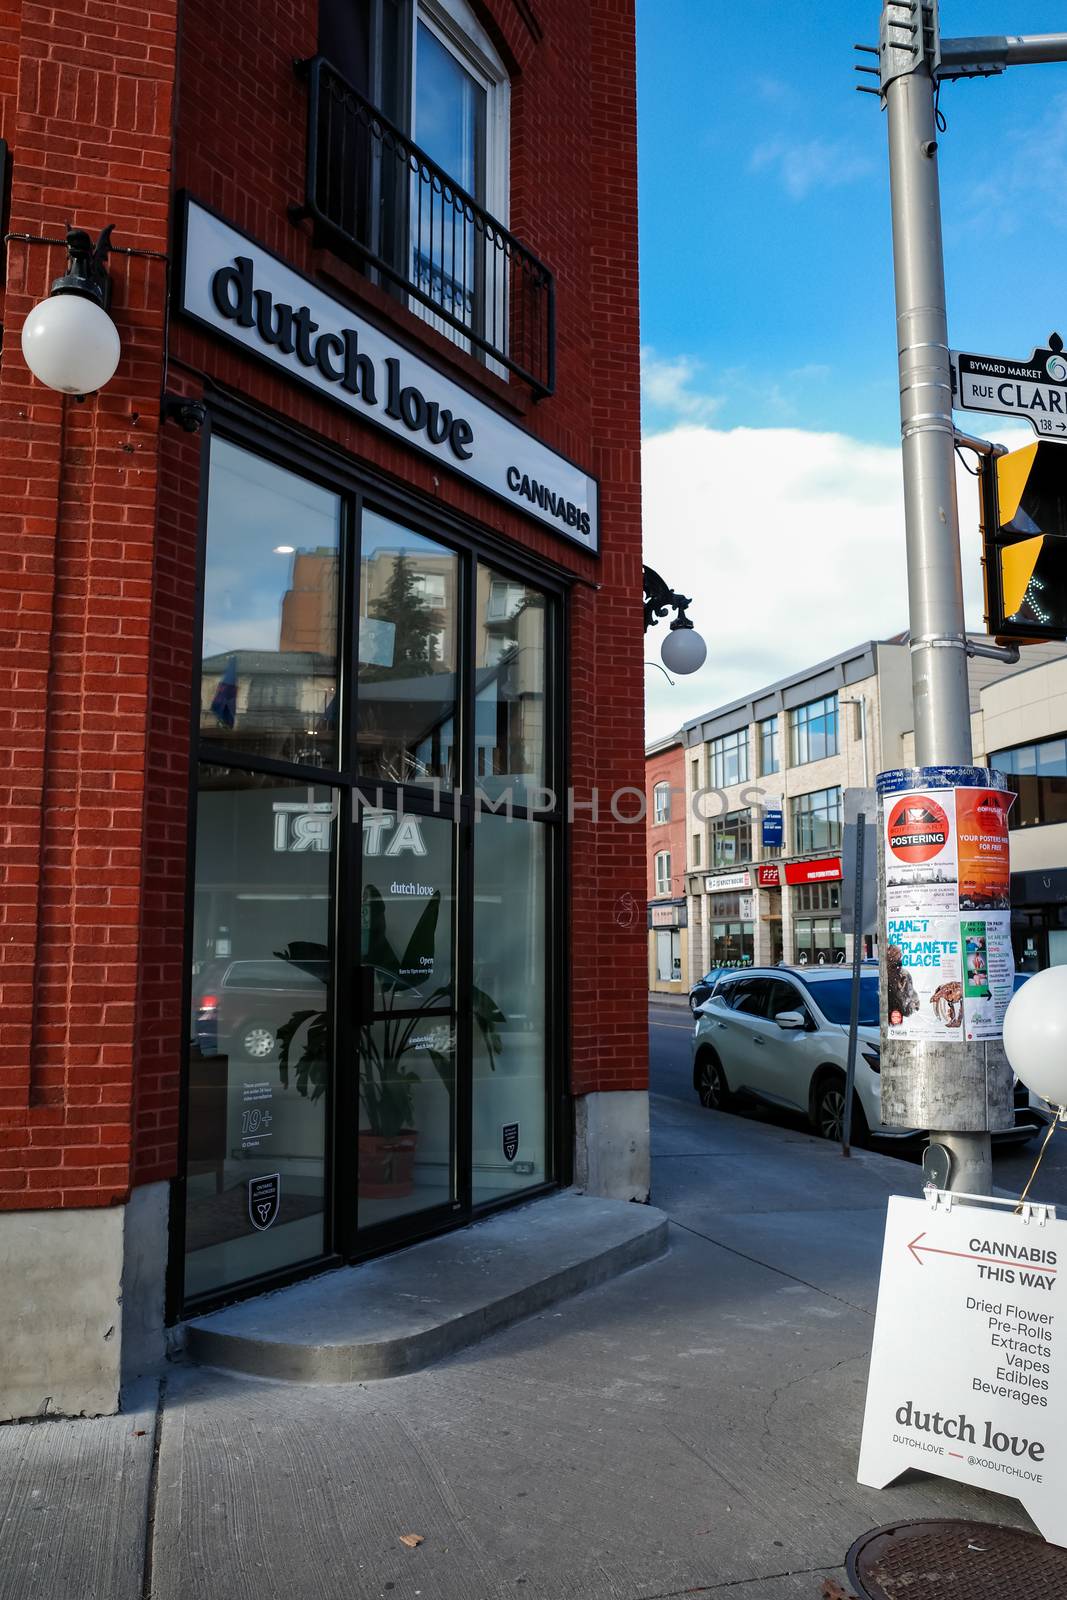 Ottawa, Ontario, Canada - November 18, 2020: A newly-opened Dutch Love Cannabis dispensary in the ByWard Market district of Ottawa.